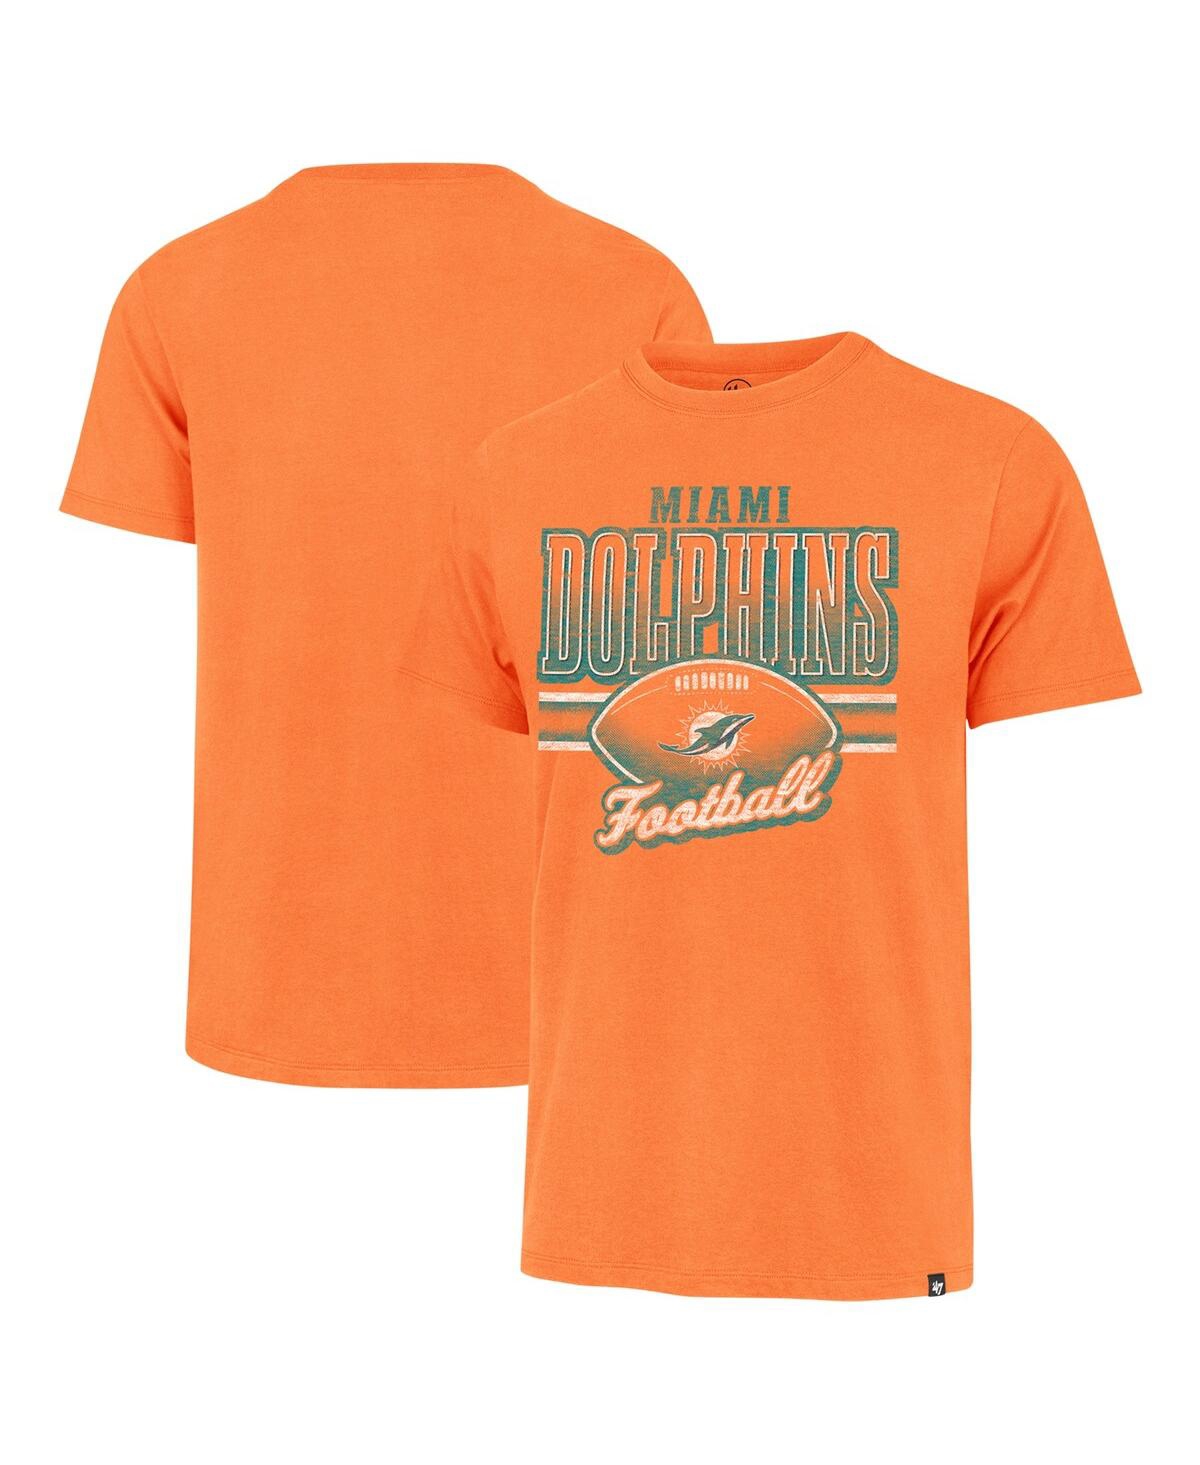 Men's '47 Brand Orange Distressed Miami Dolphins Last Call Franklin T-shirt - Orange